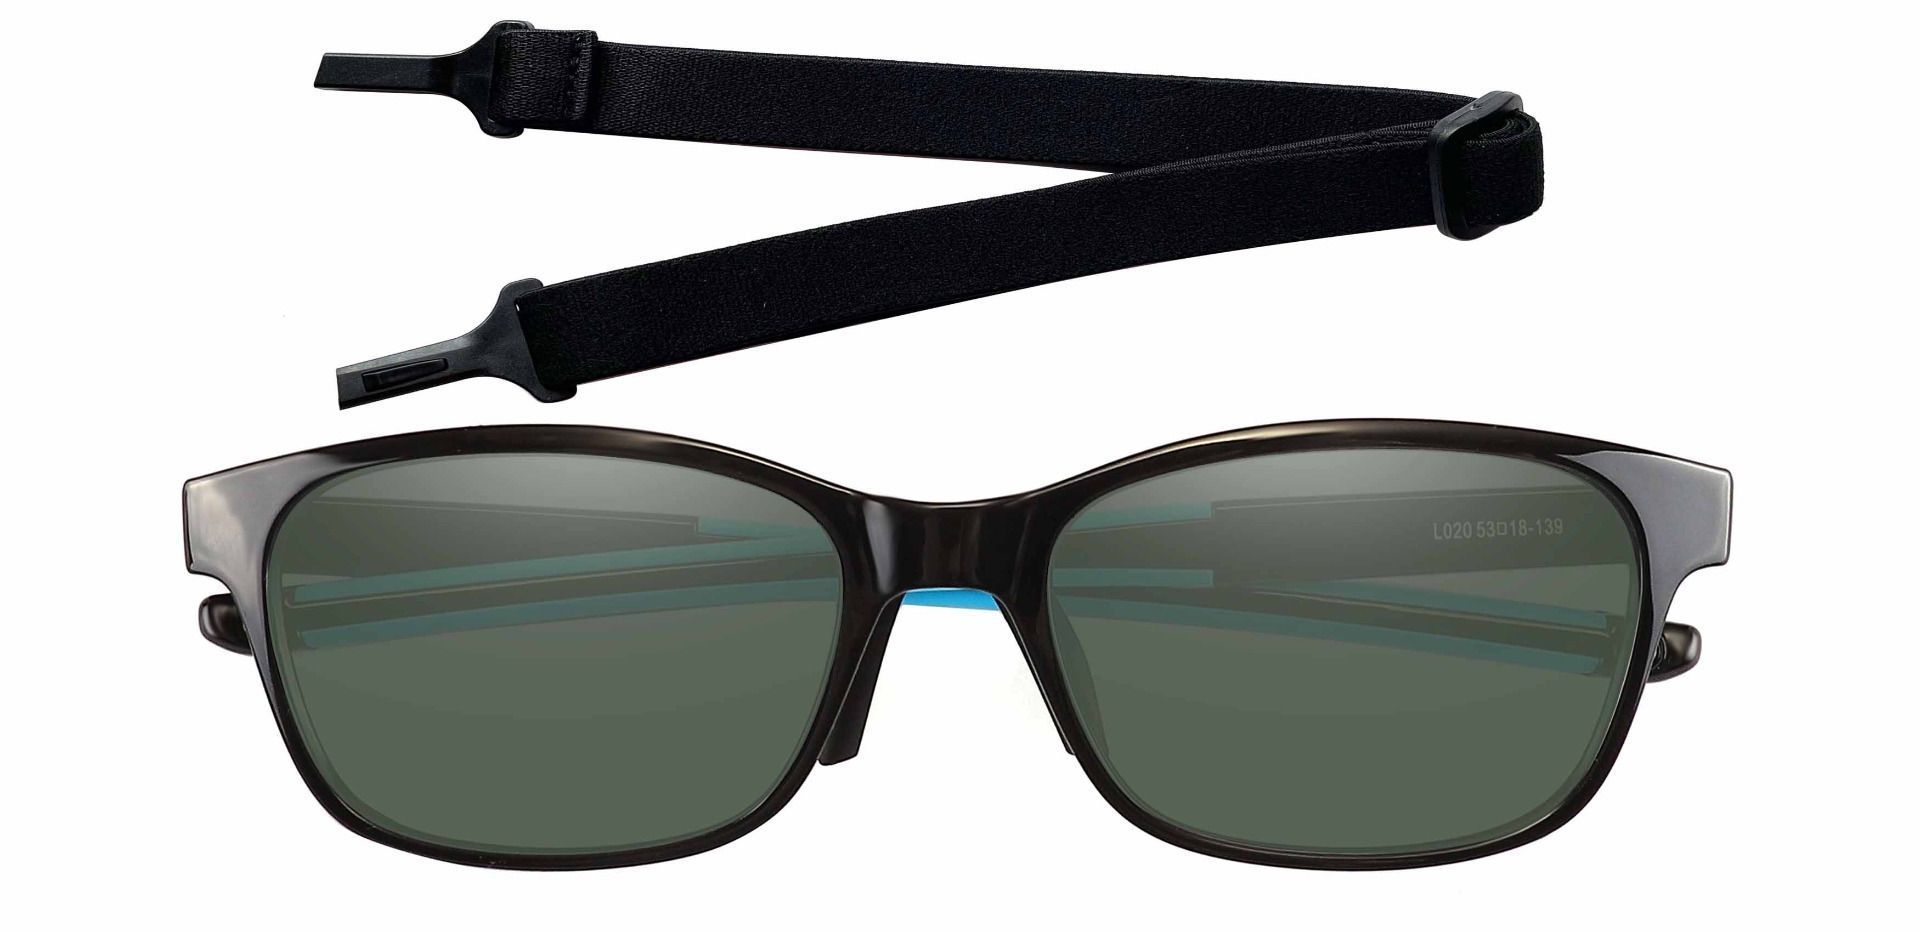 Higgins Rectangle Lined Bifocal Sunglasses - Black Frame With Green Lenses